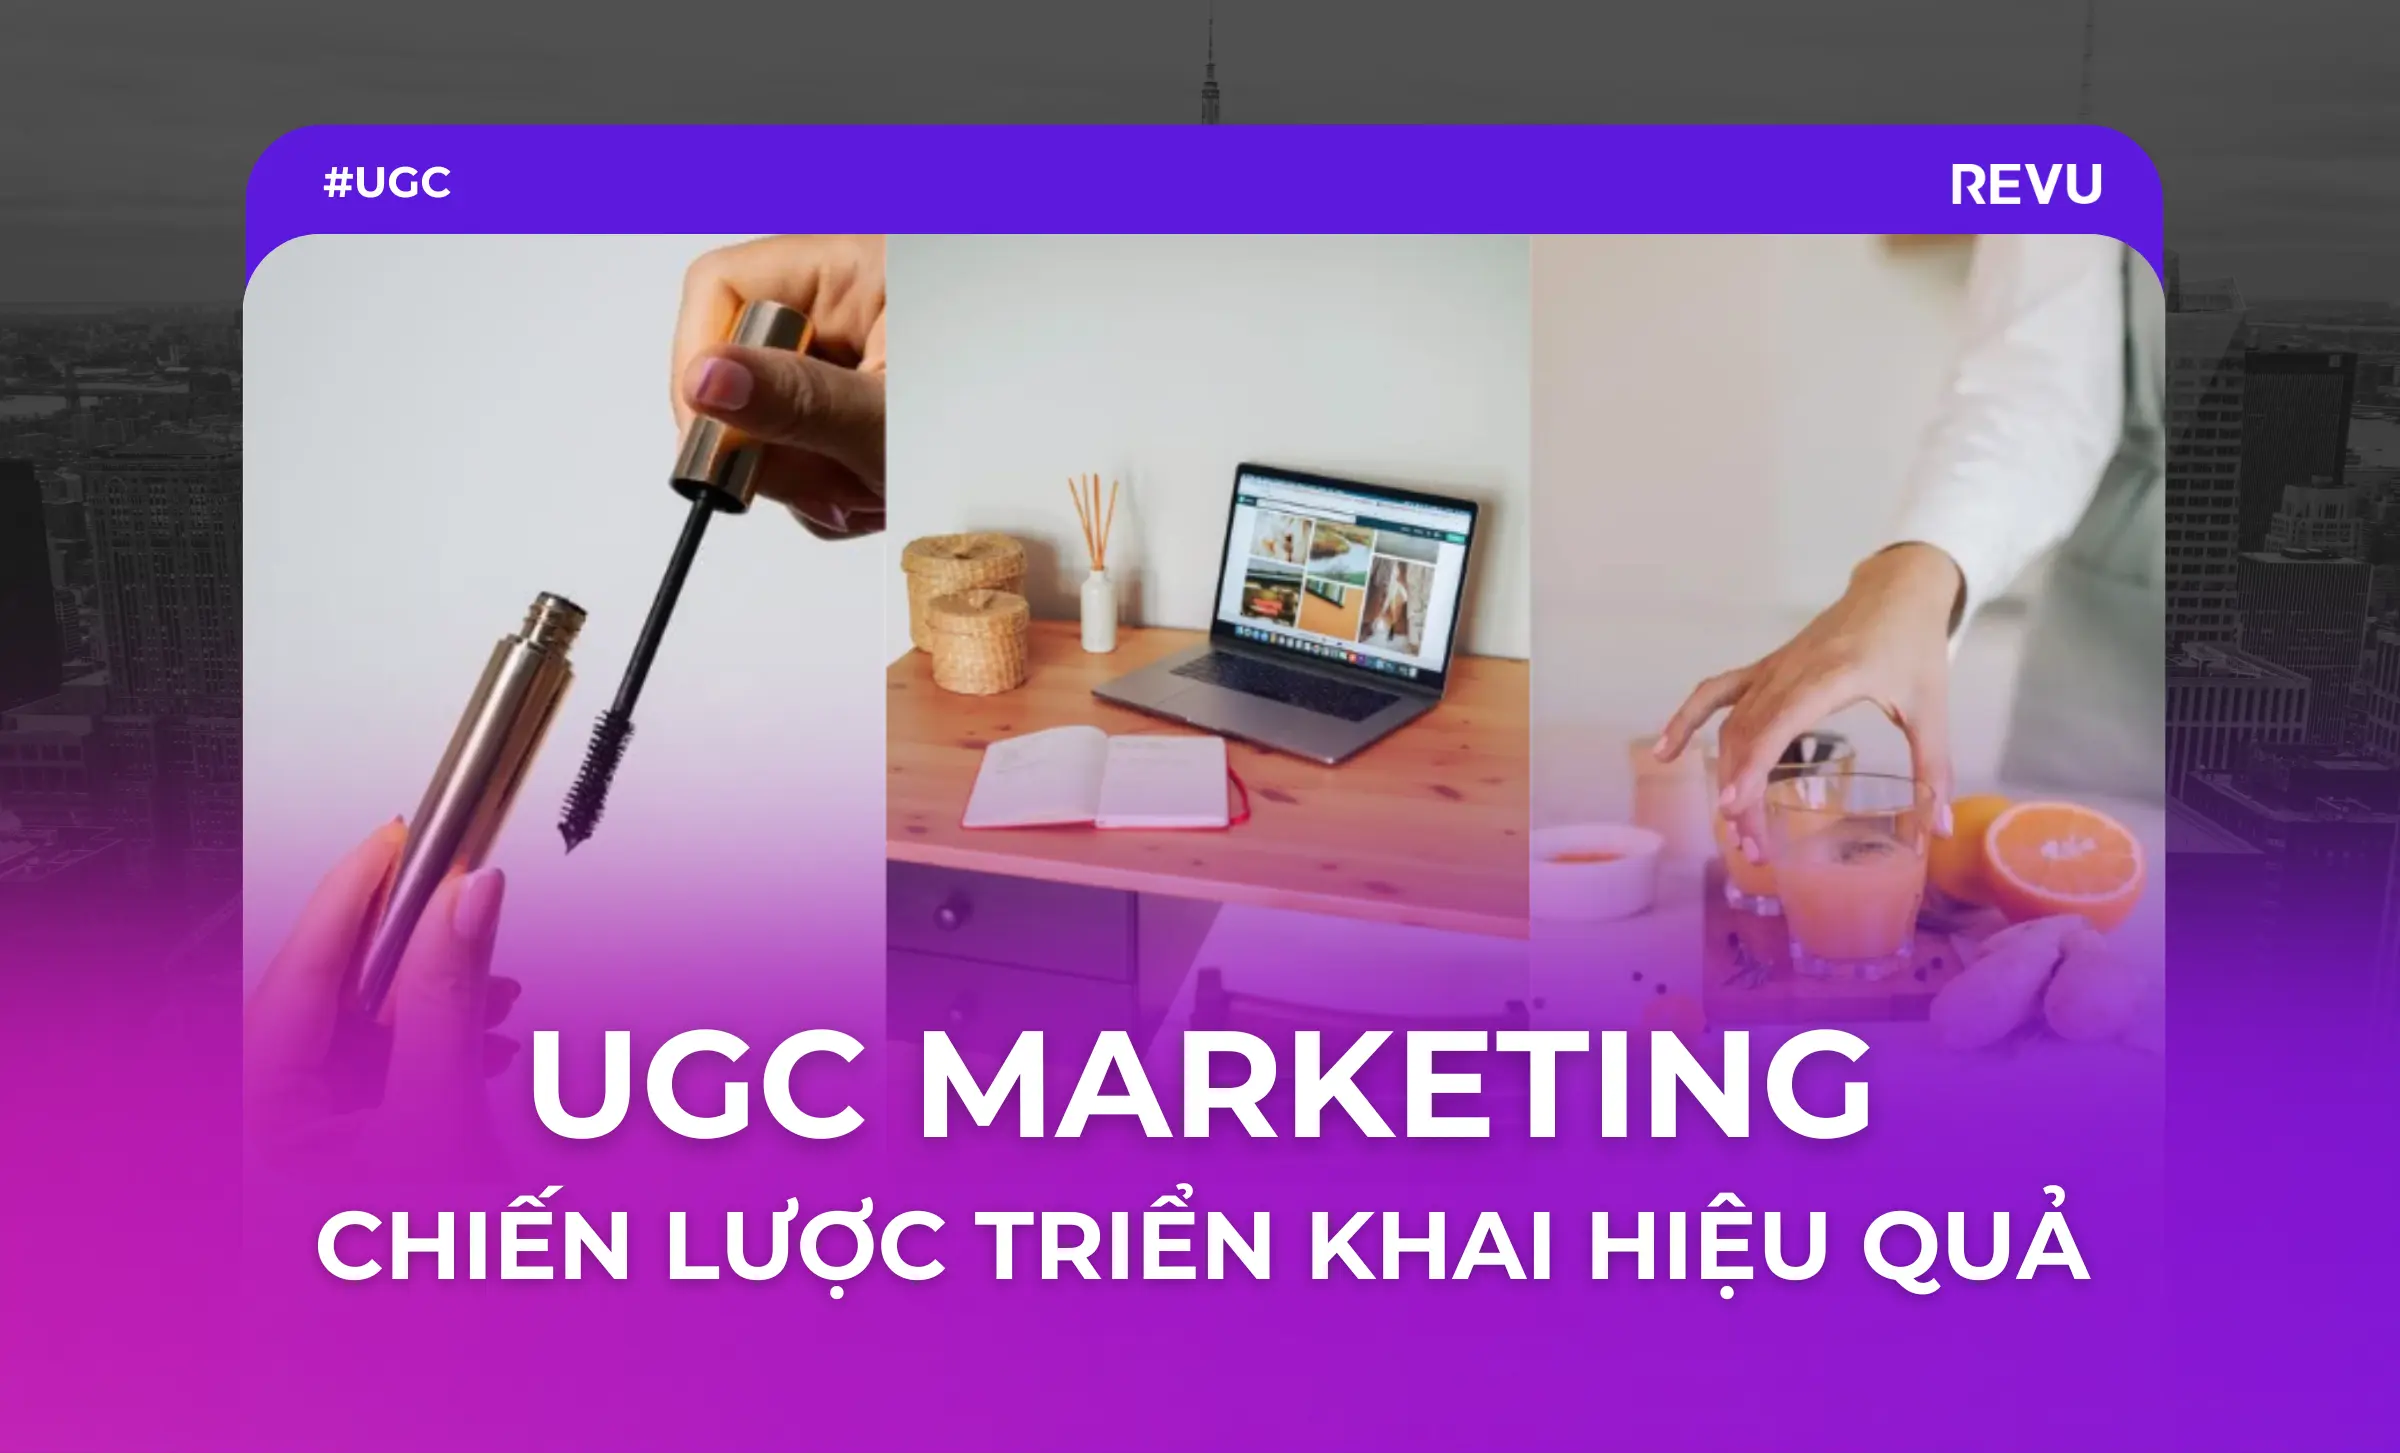 UGC Marketing user generated content